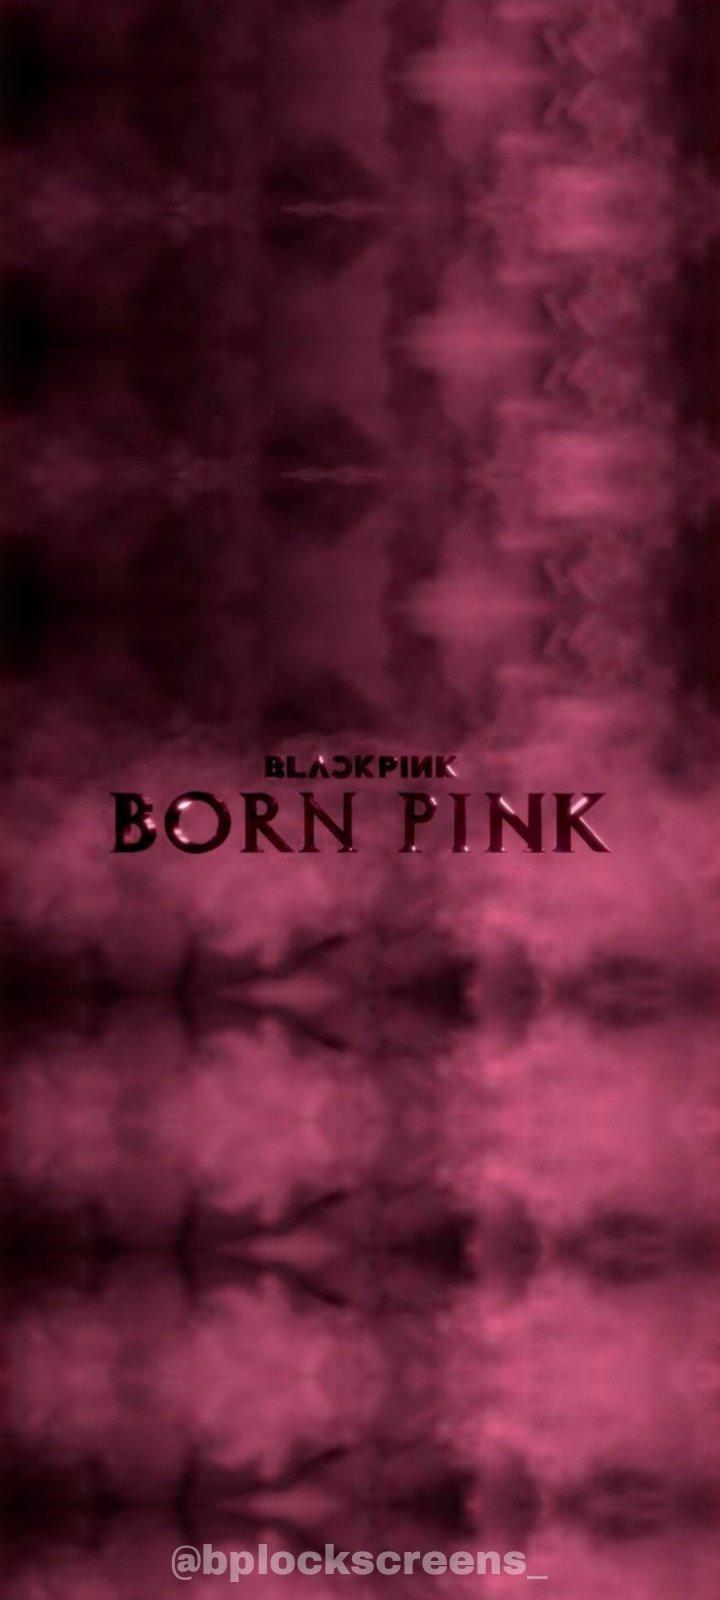 BLACKPINK BORN PINK WALLPAPER ver1  Pôster de música Blakpink Boruto  personagens